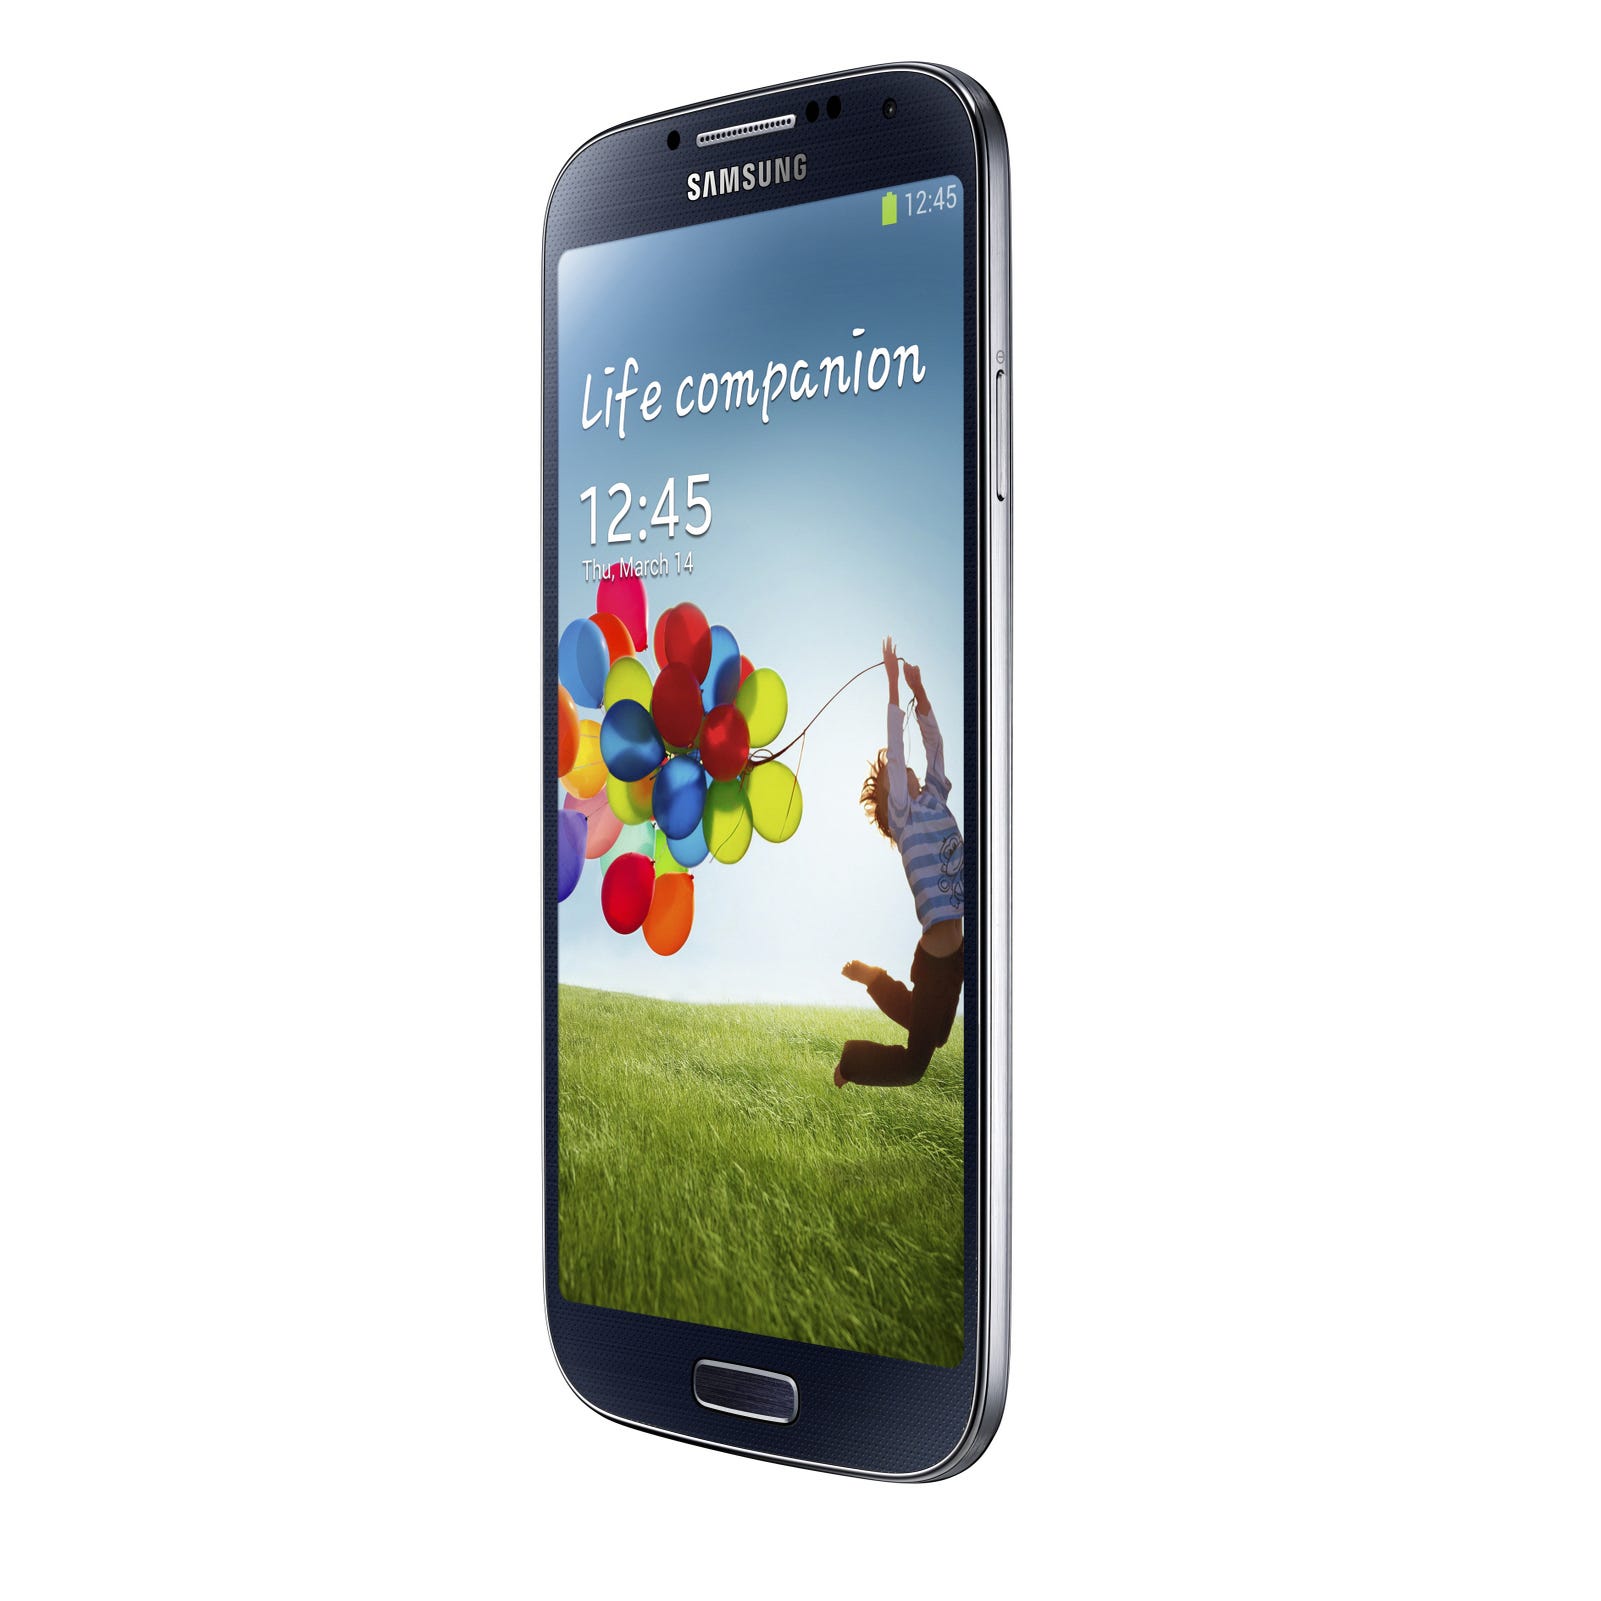 Самсунг галакси с 24 характеристики. Samsung Galaxy s4 i9500. Samsung Galaxy s4 gt-i9505. Samsung Galaxy s4 2013. Samsung Galaxy s4 gt-i9500 32gb.